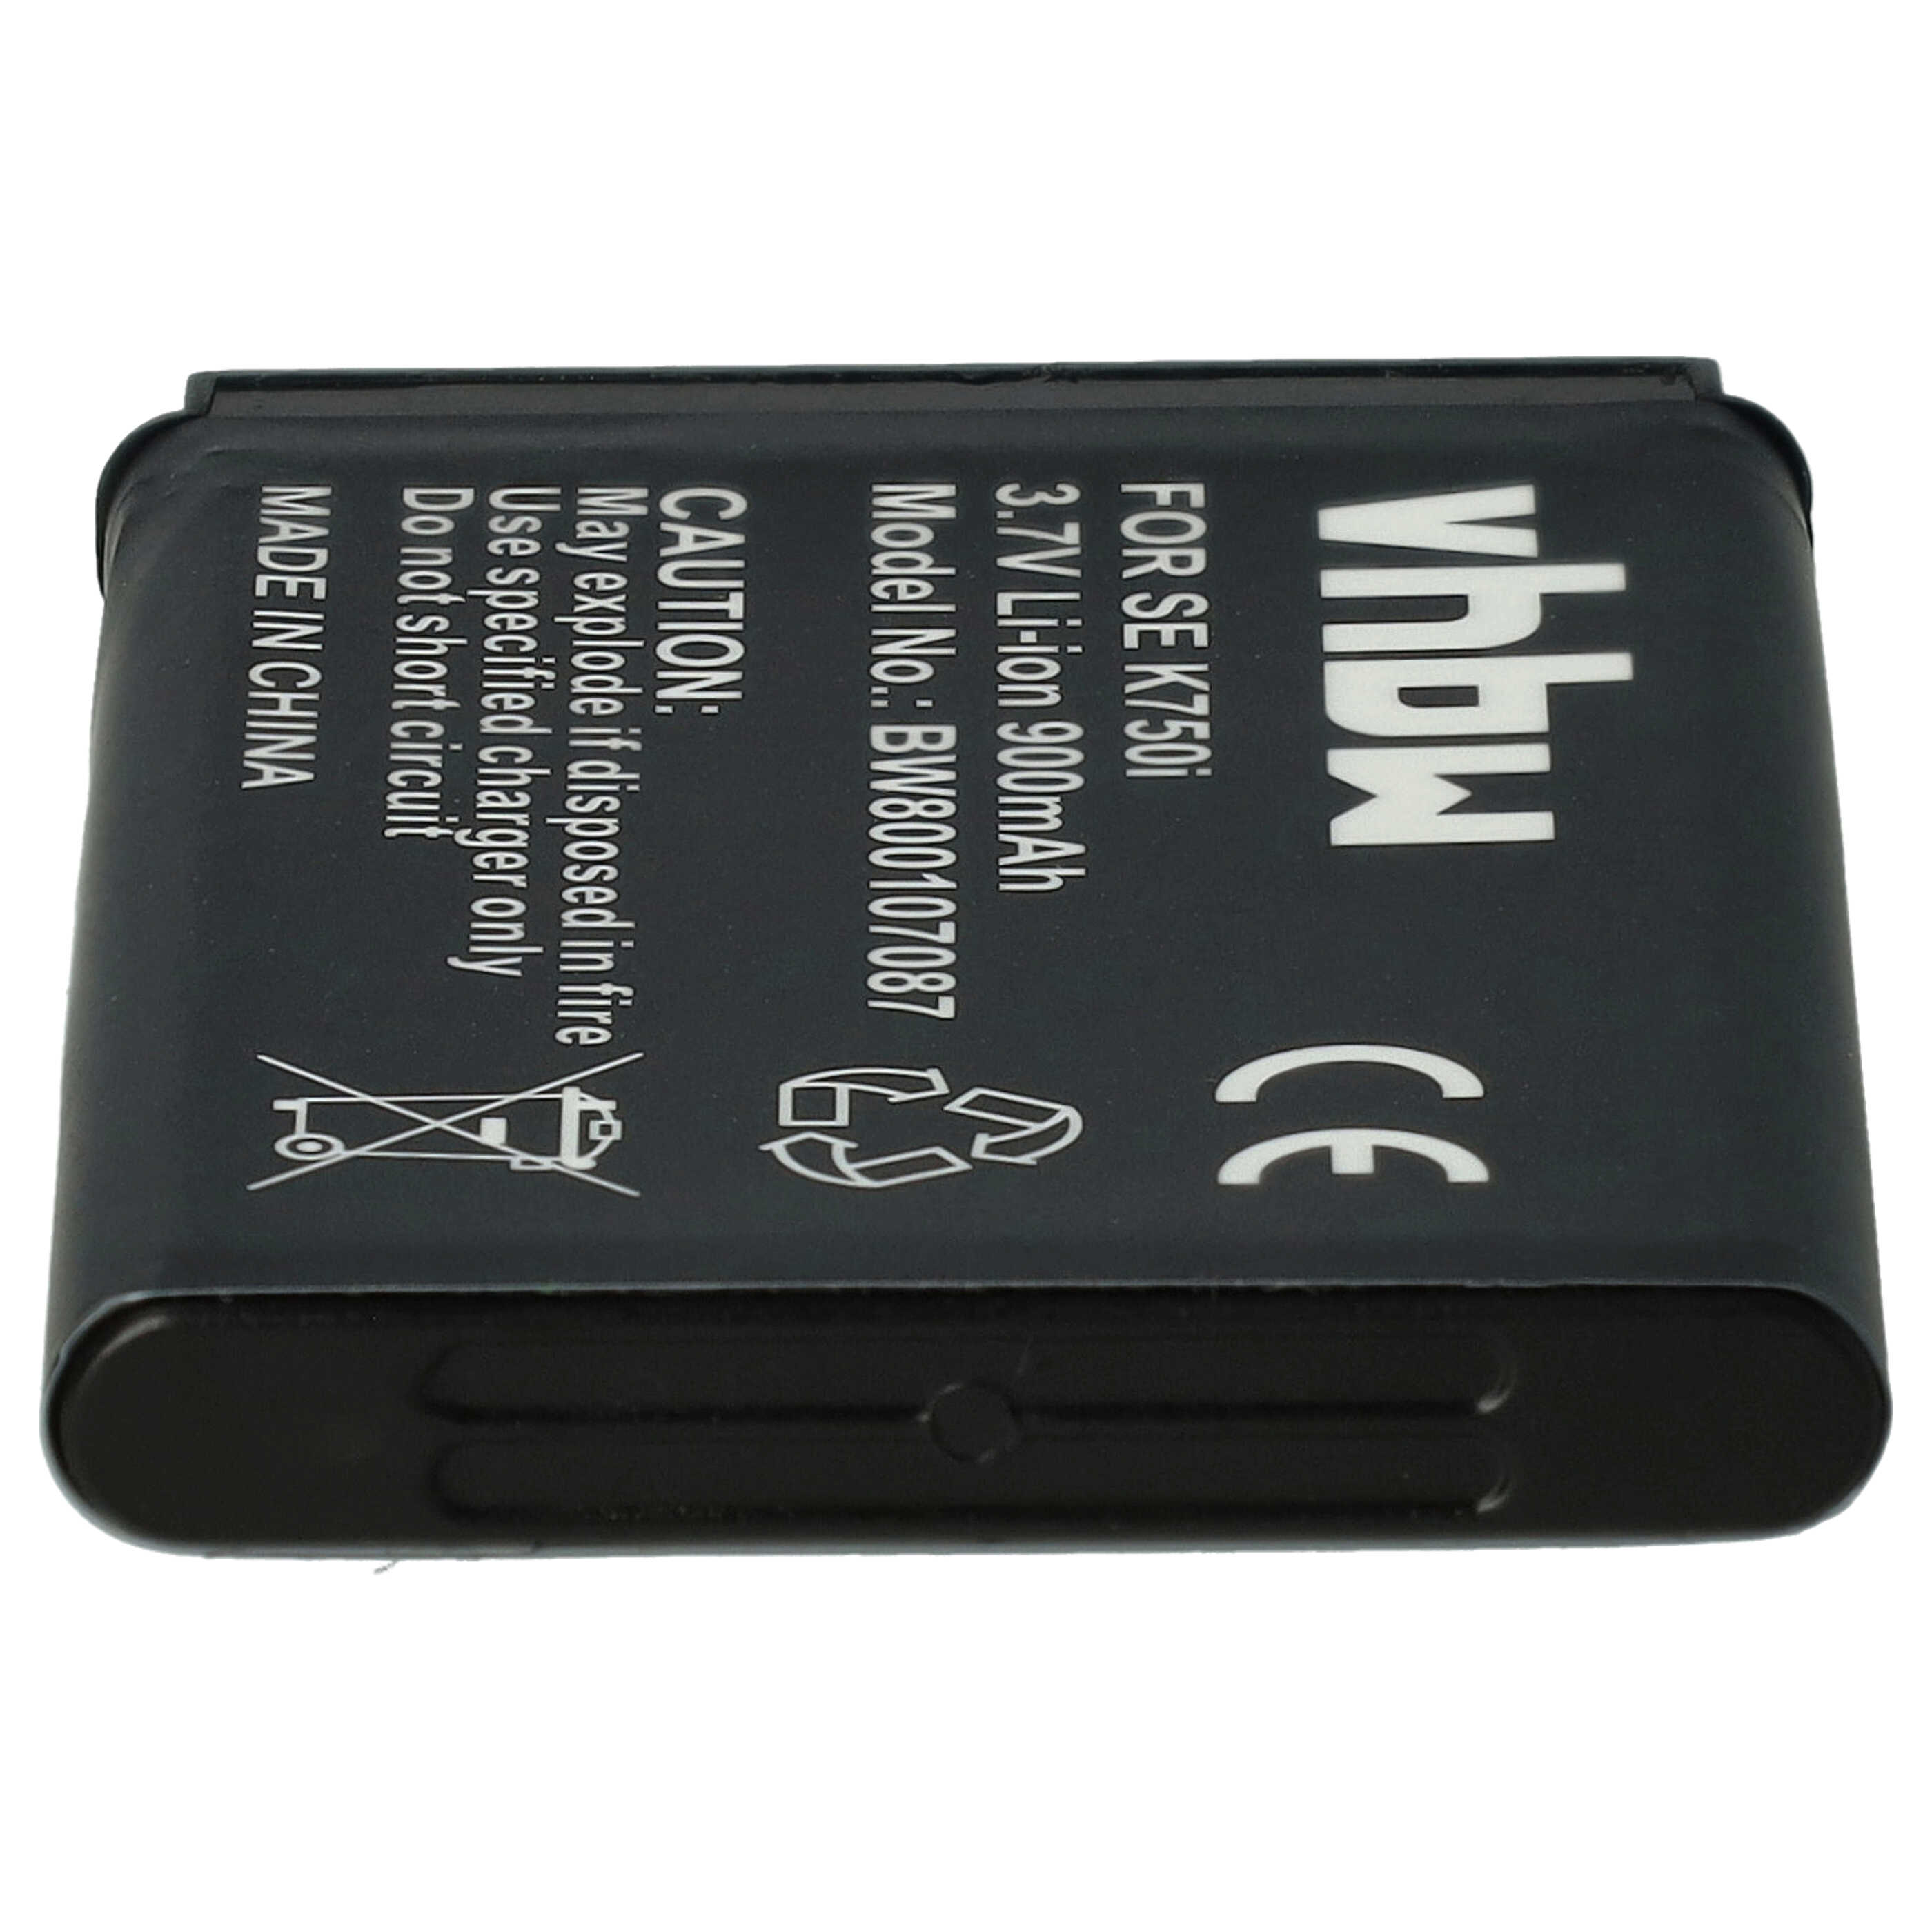 Akumulator bateria do telefonu smartfona zam. Sony-Ericsson BST-37 - 900mAh, 3,7V, Li-Ion